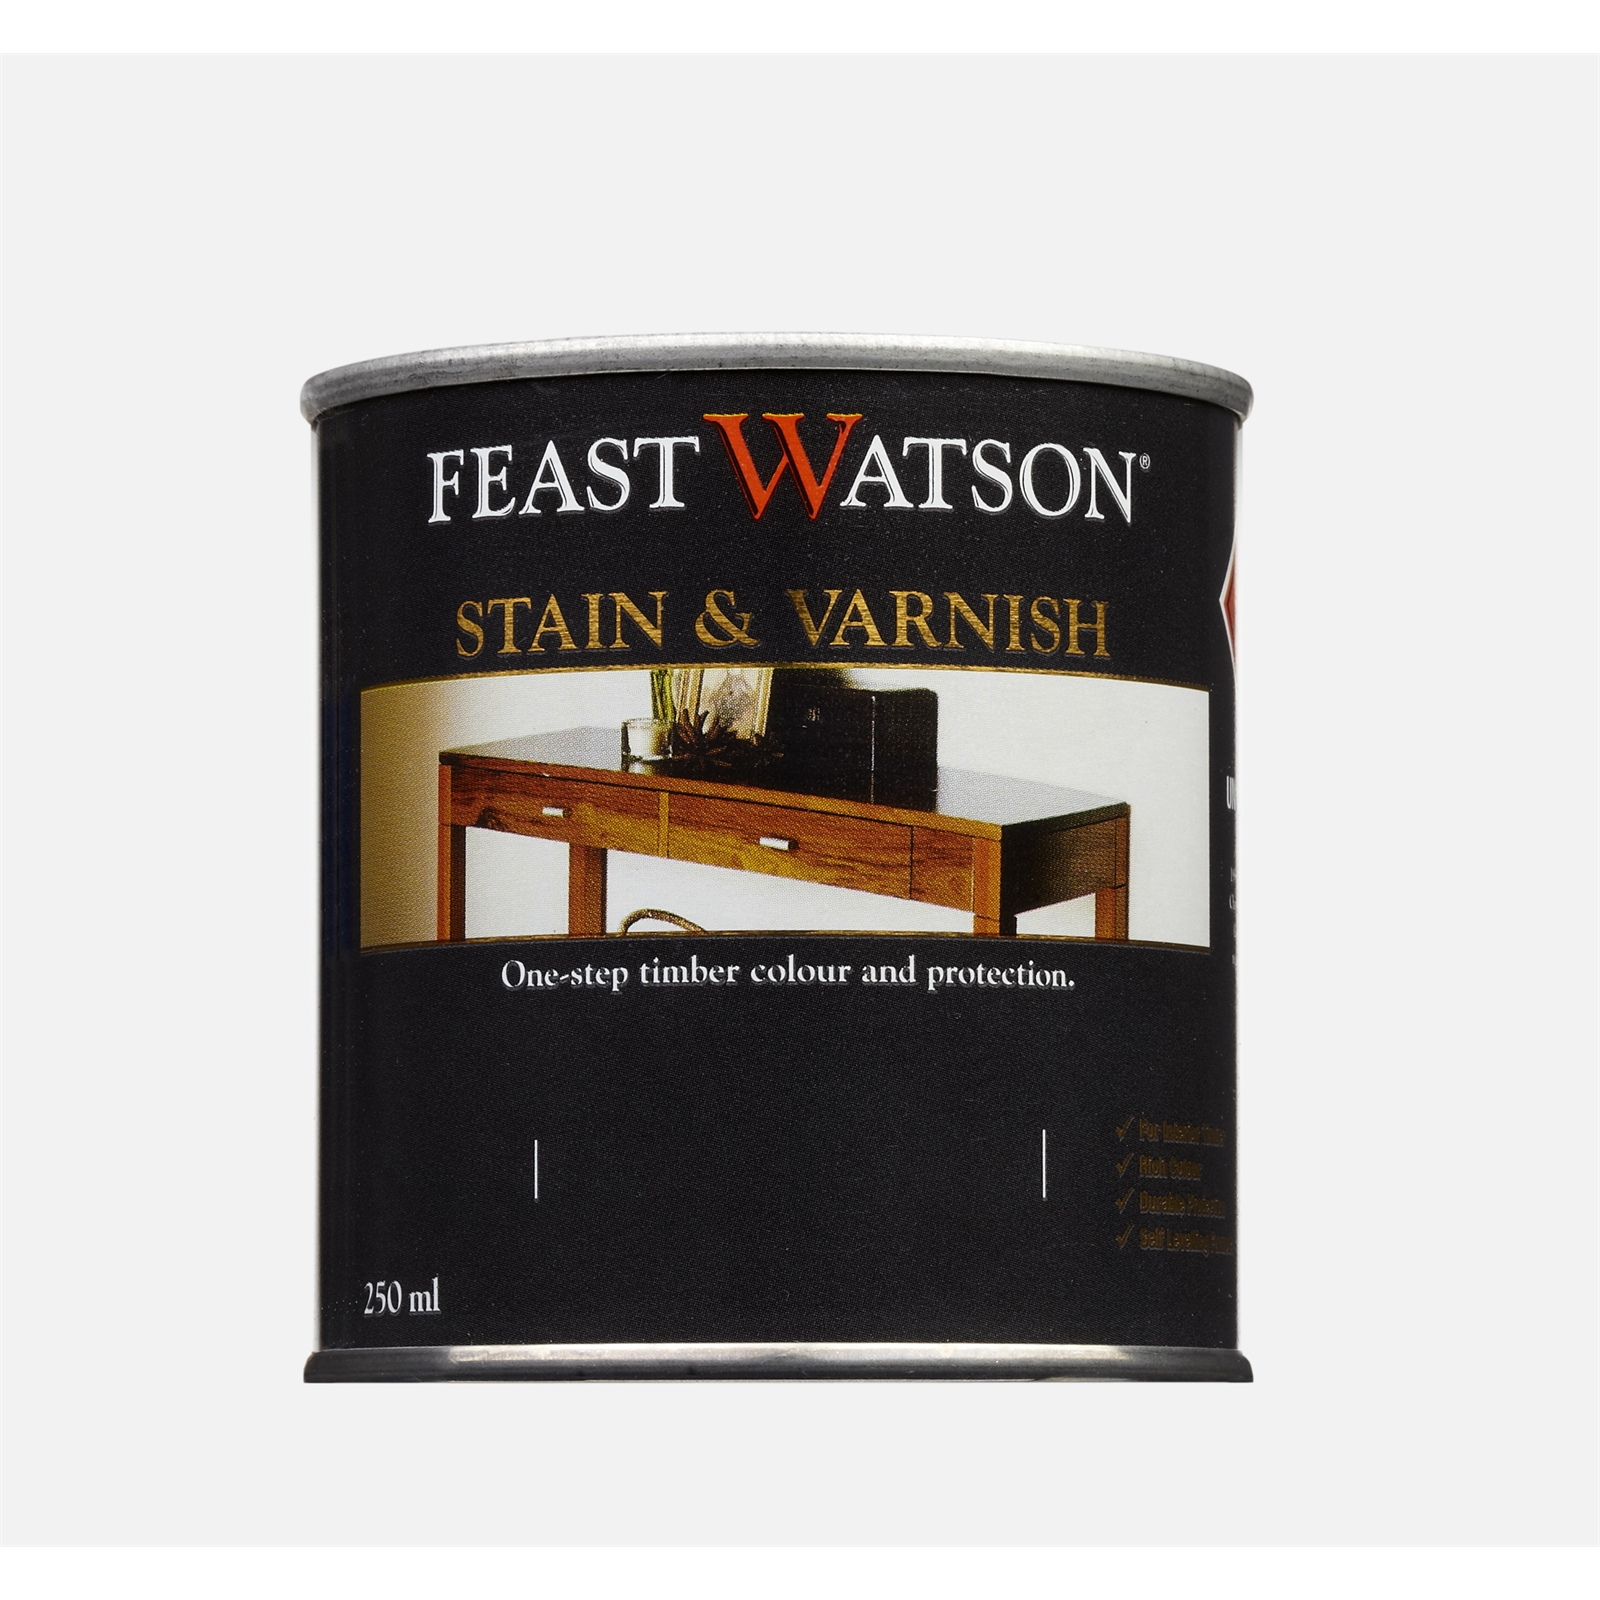 Feast Watson 250ml Gloss Black Japan Stain And Varnish